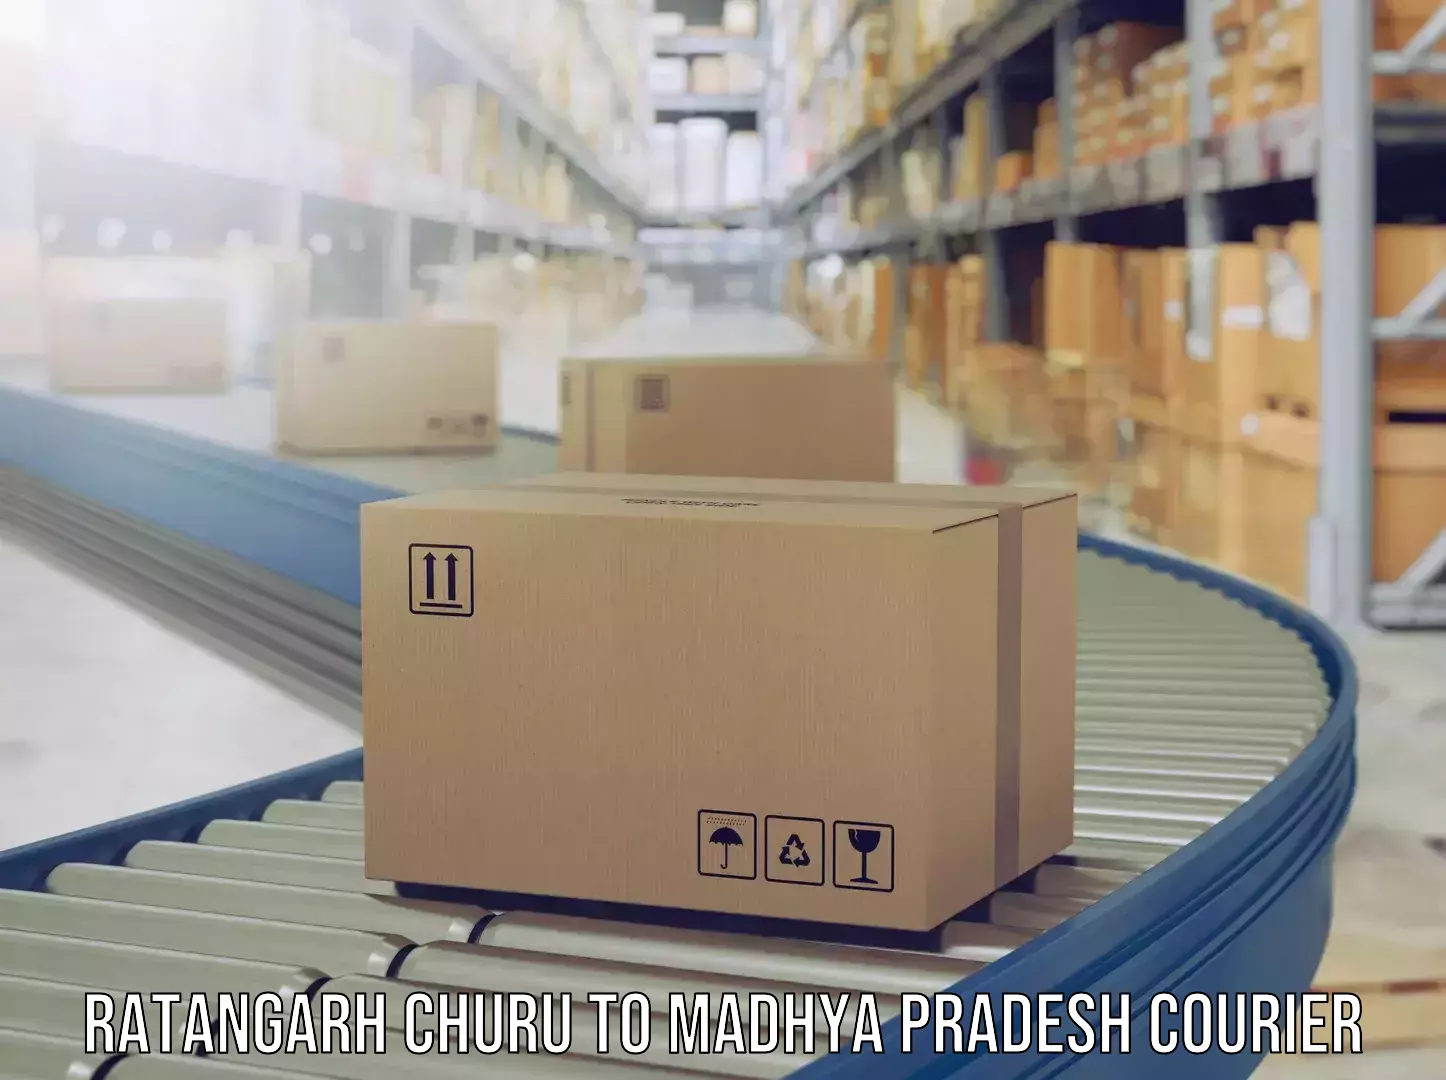 Luggage delivery network Ratangarh Churu to Shivpuri